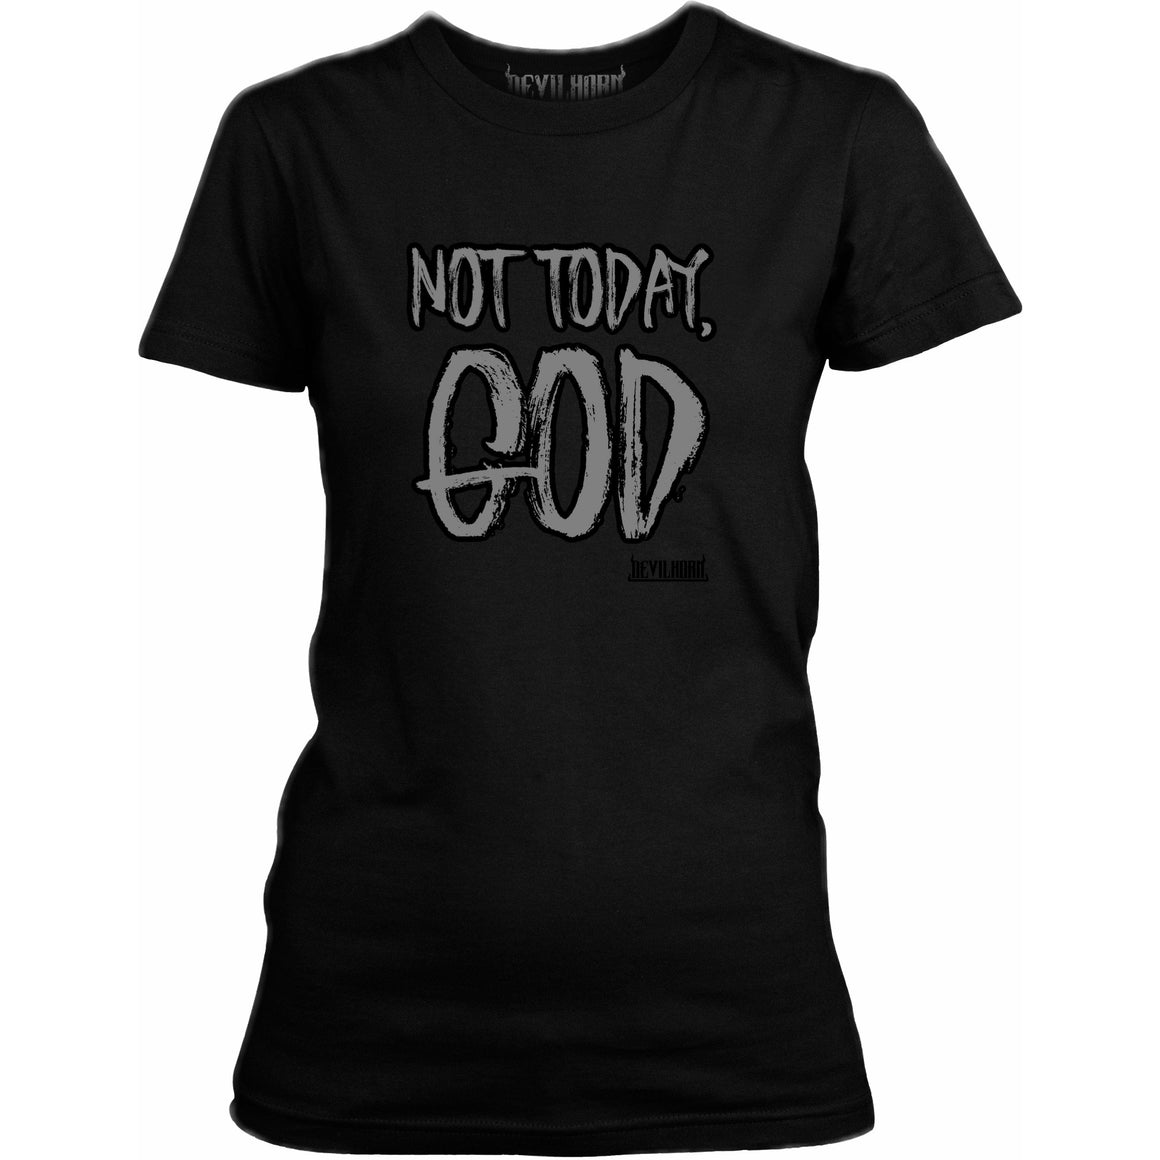 NOT TODAY GOD ladies t shirt - DEVILHORN